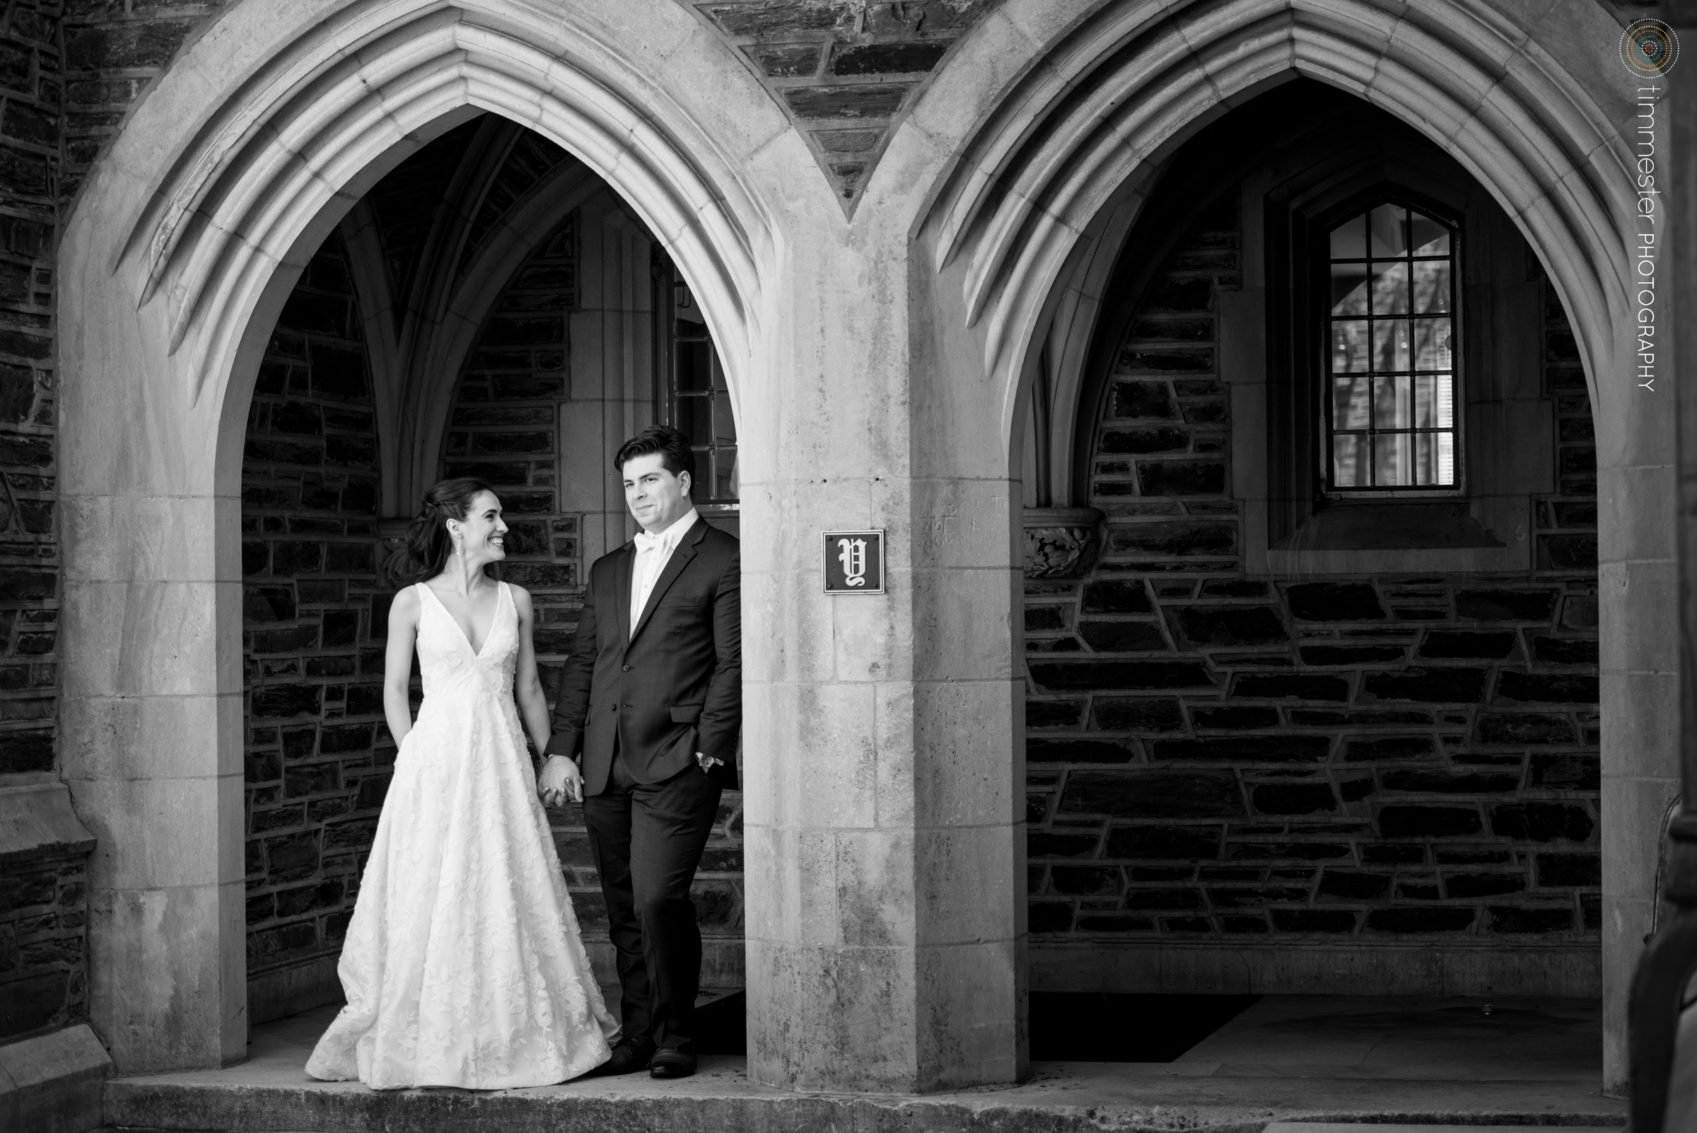 Duke alumni have their wedding portraits taken at Duke University Chapel in Durham, NC